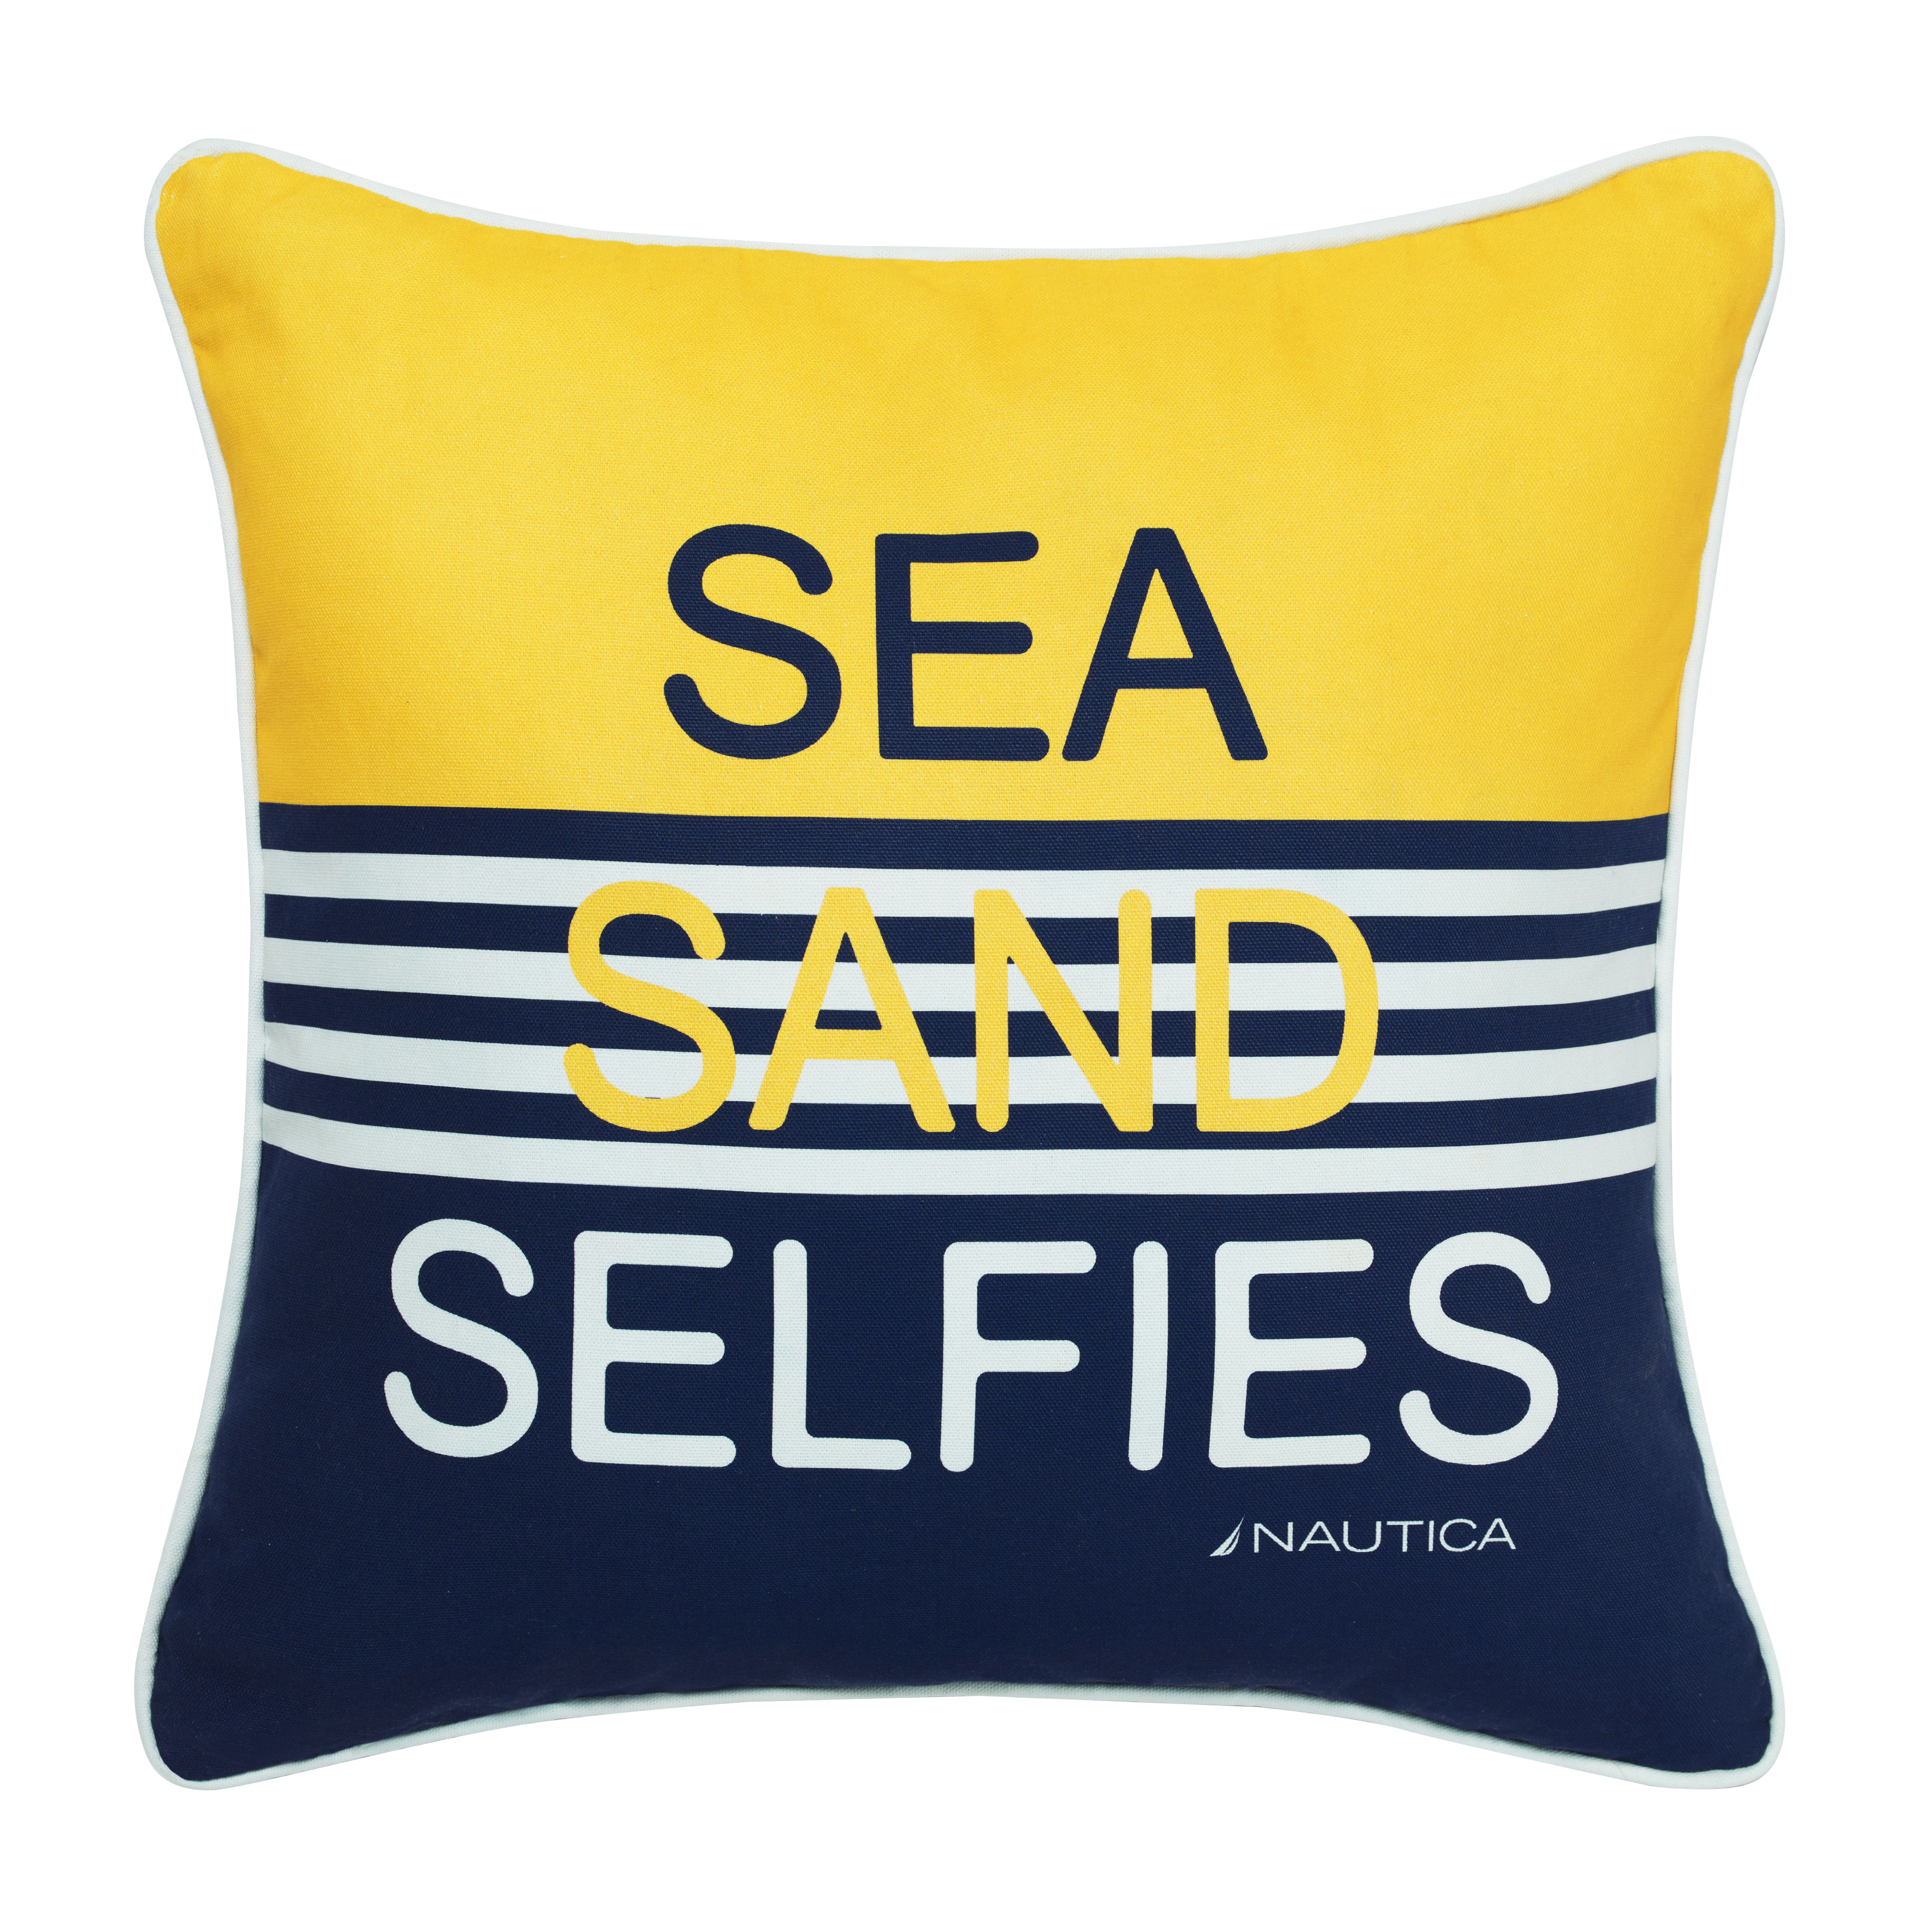 Nautica Sea Sand Selfies 20x20" Kids Decorative Bed Pillow